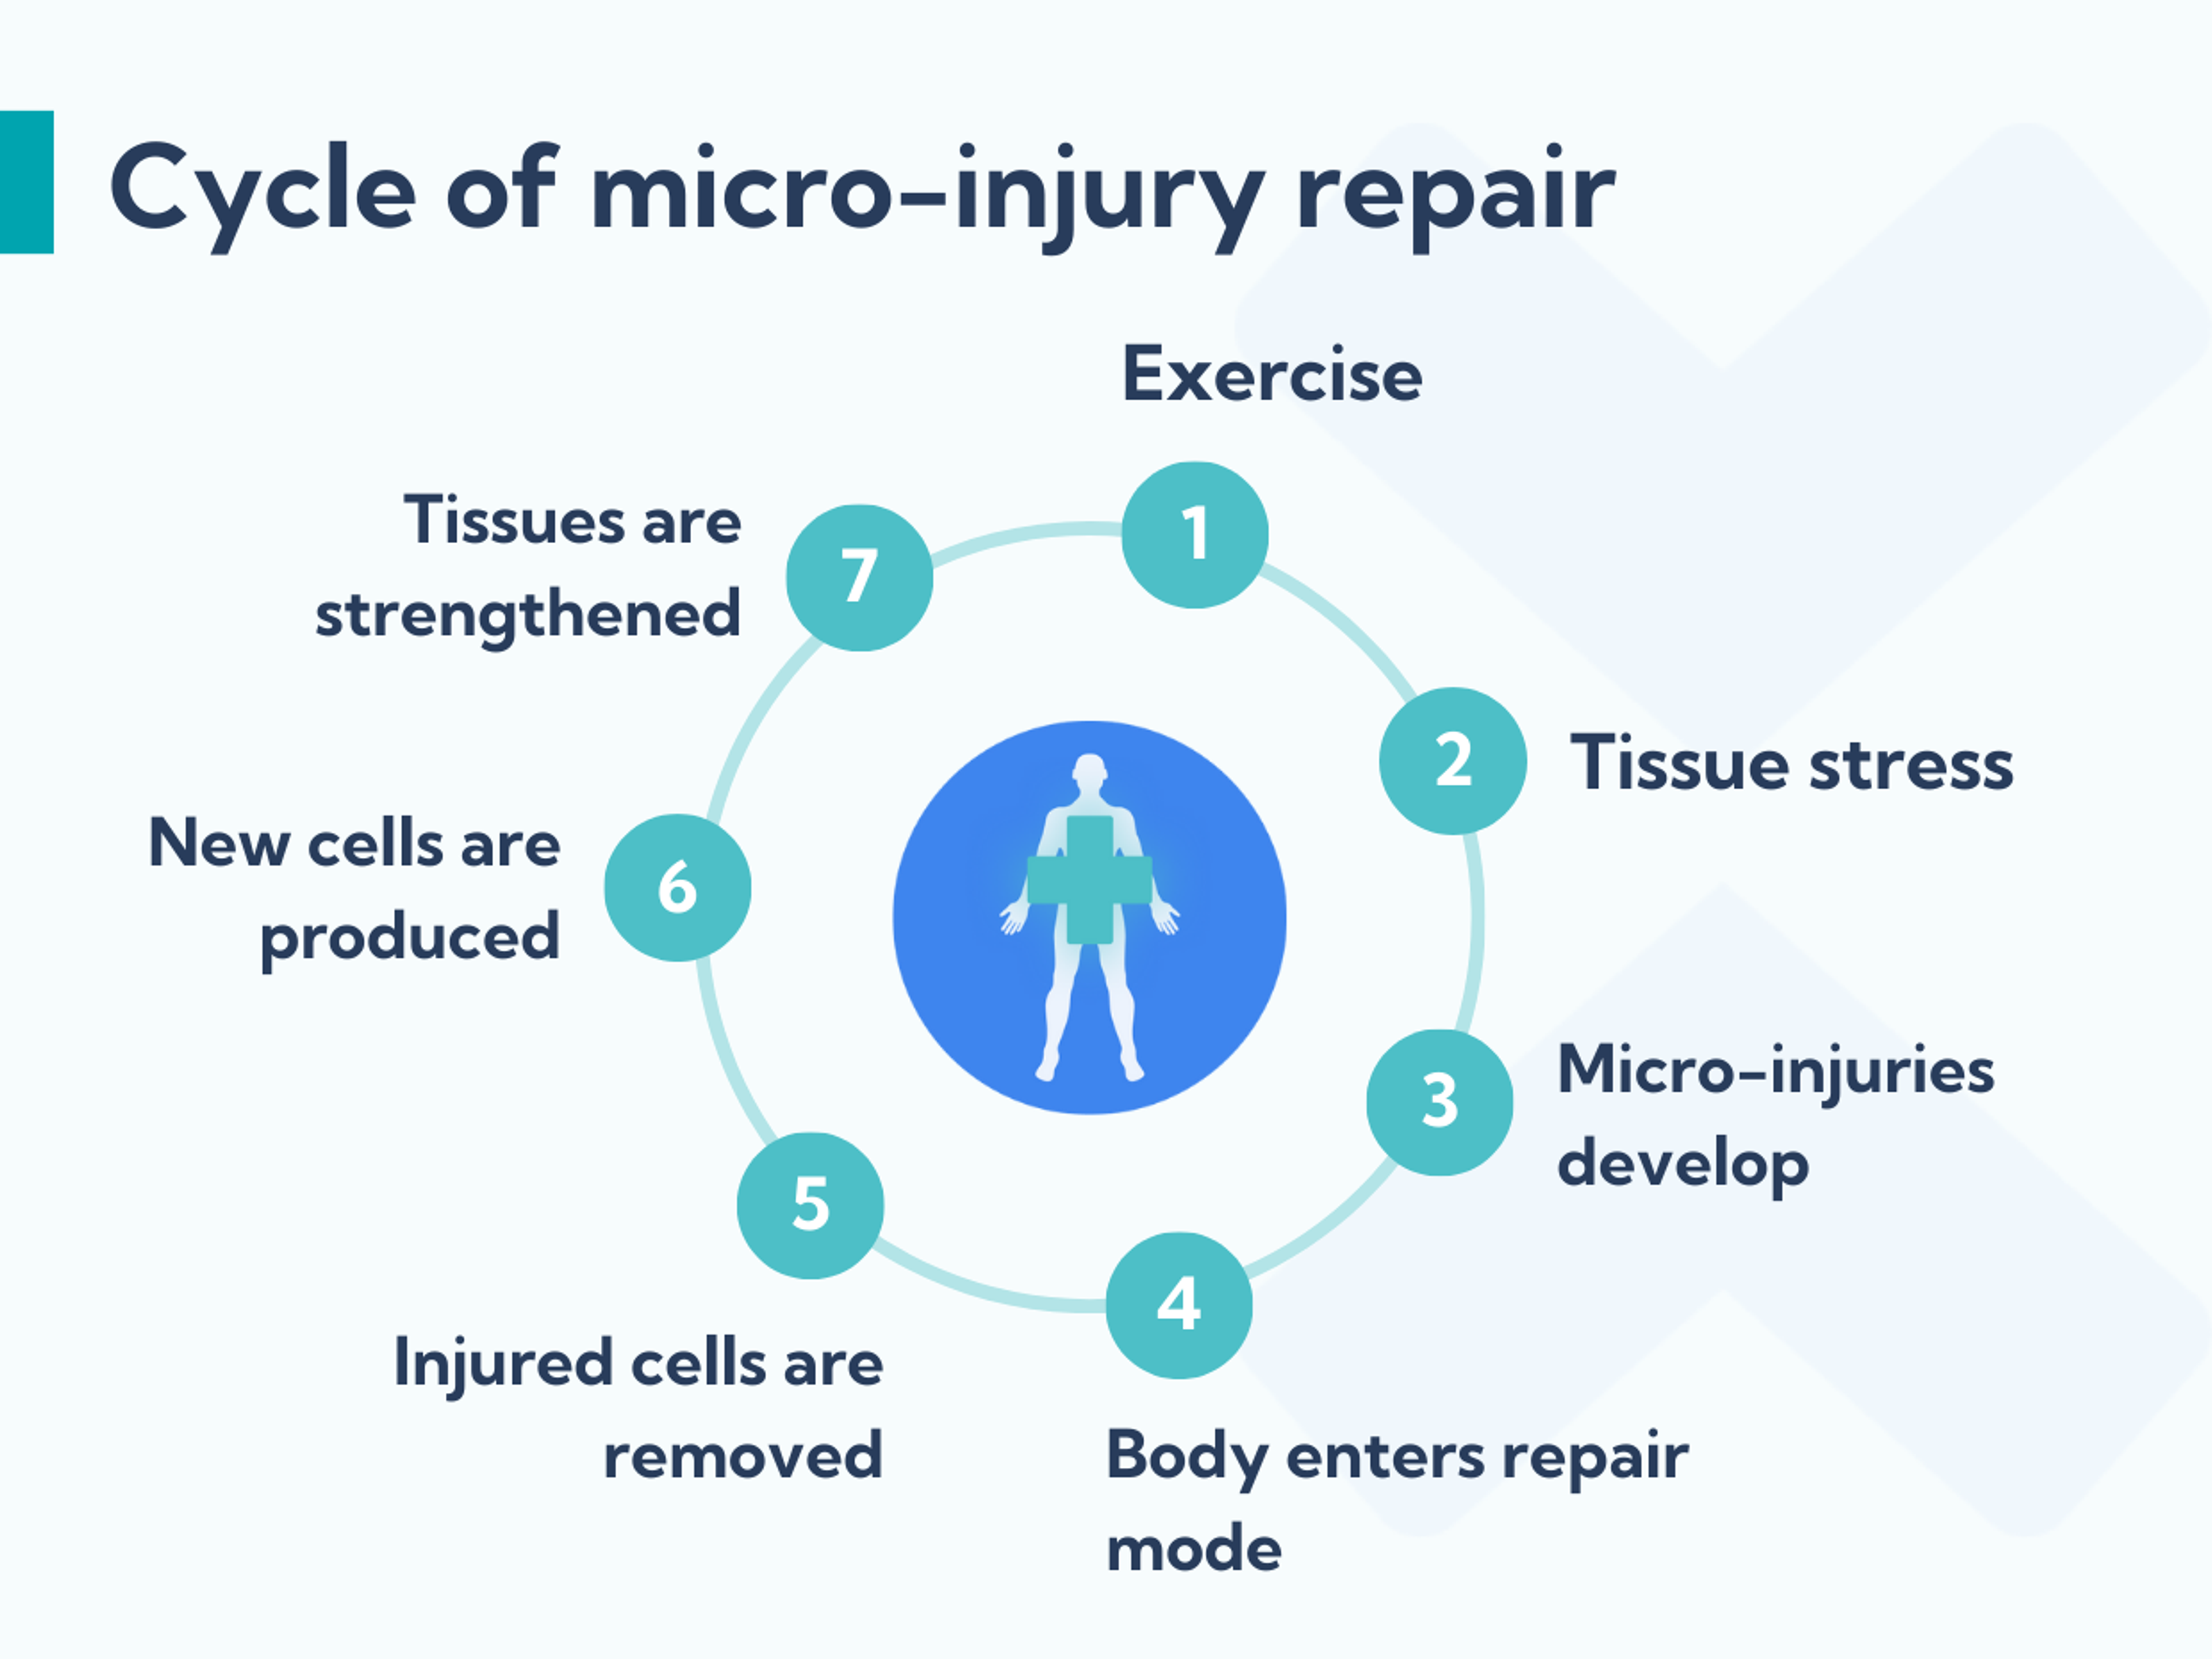 The cycle of micro-injury repair.